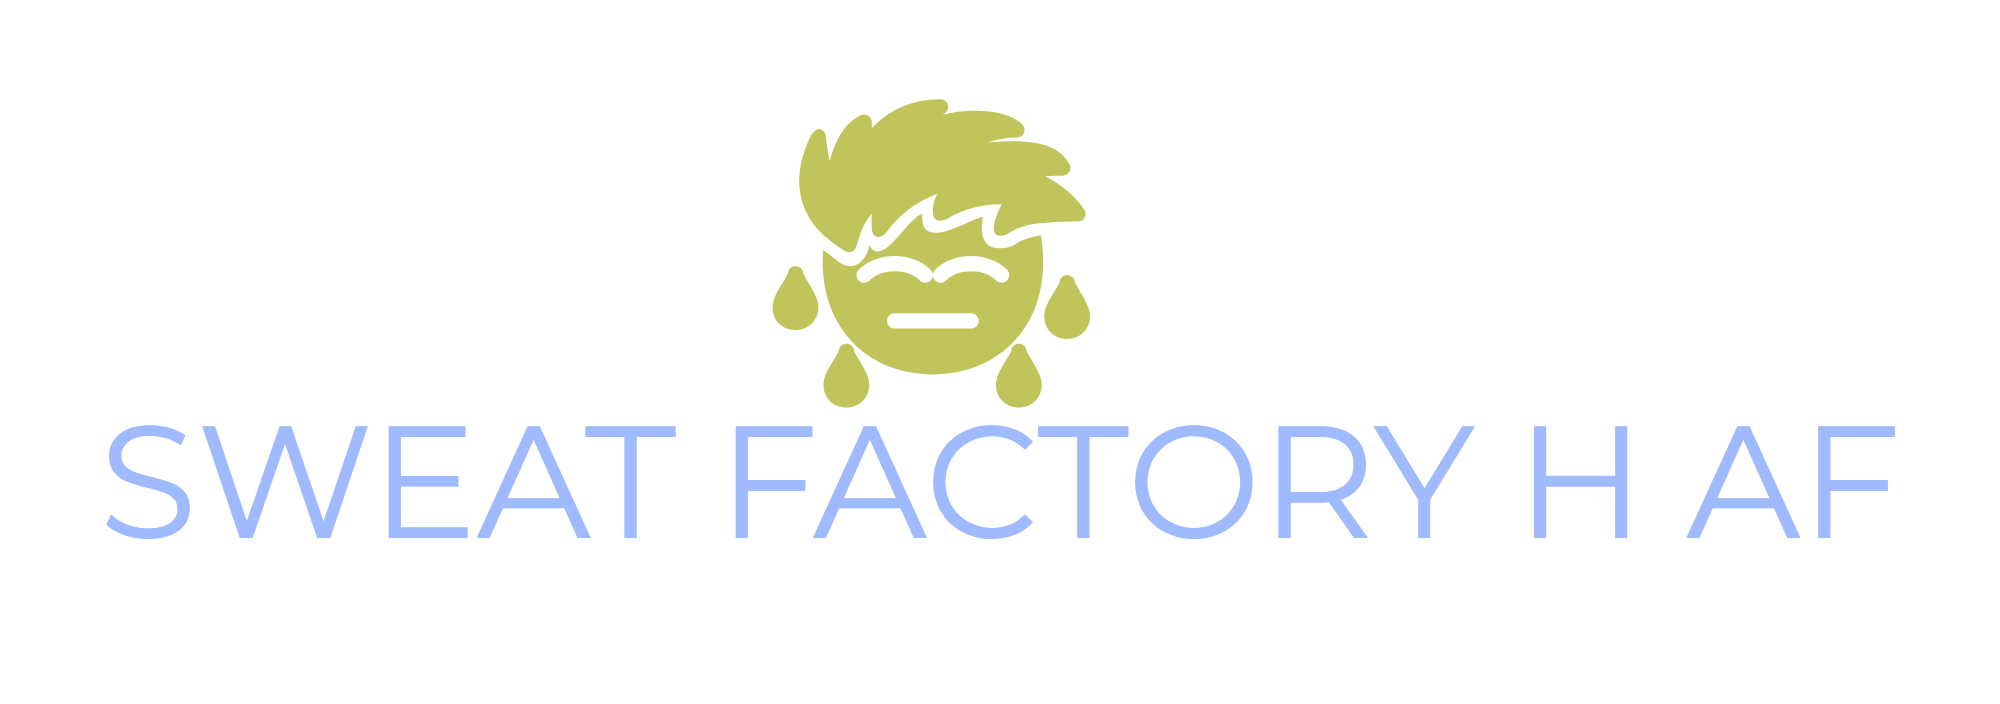 SWEAT FACTORY H AF (Copy)